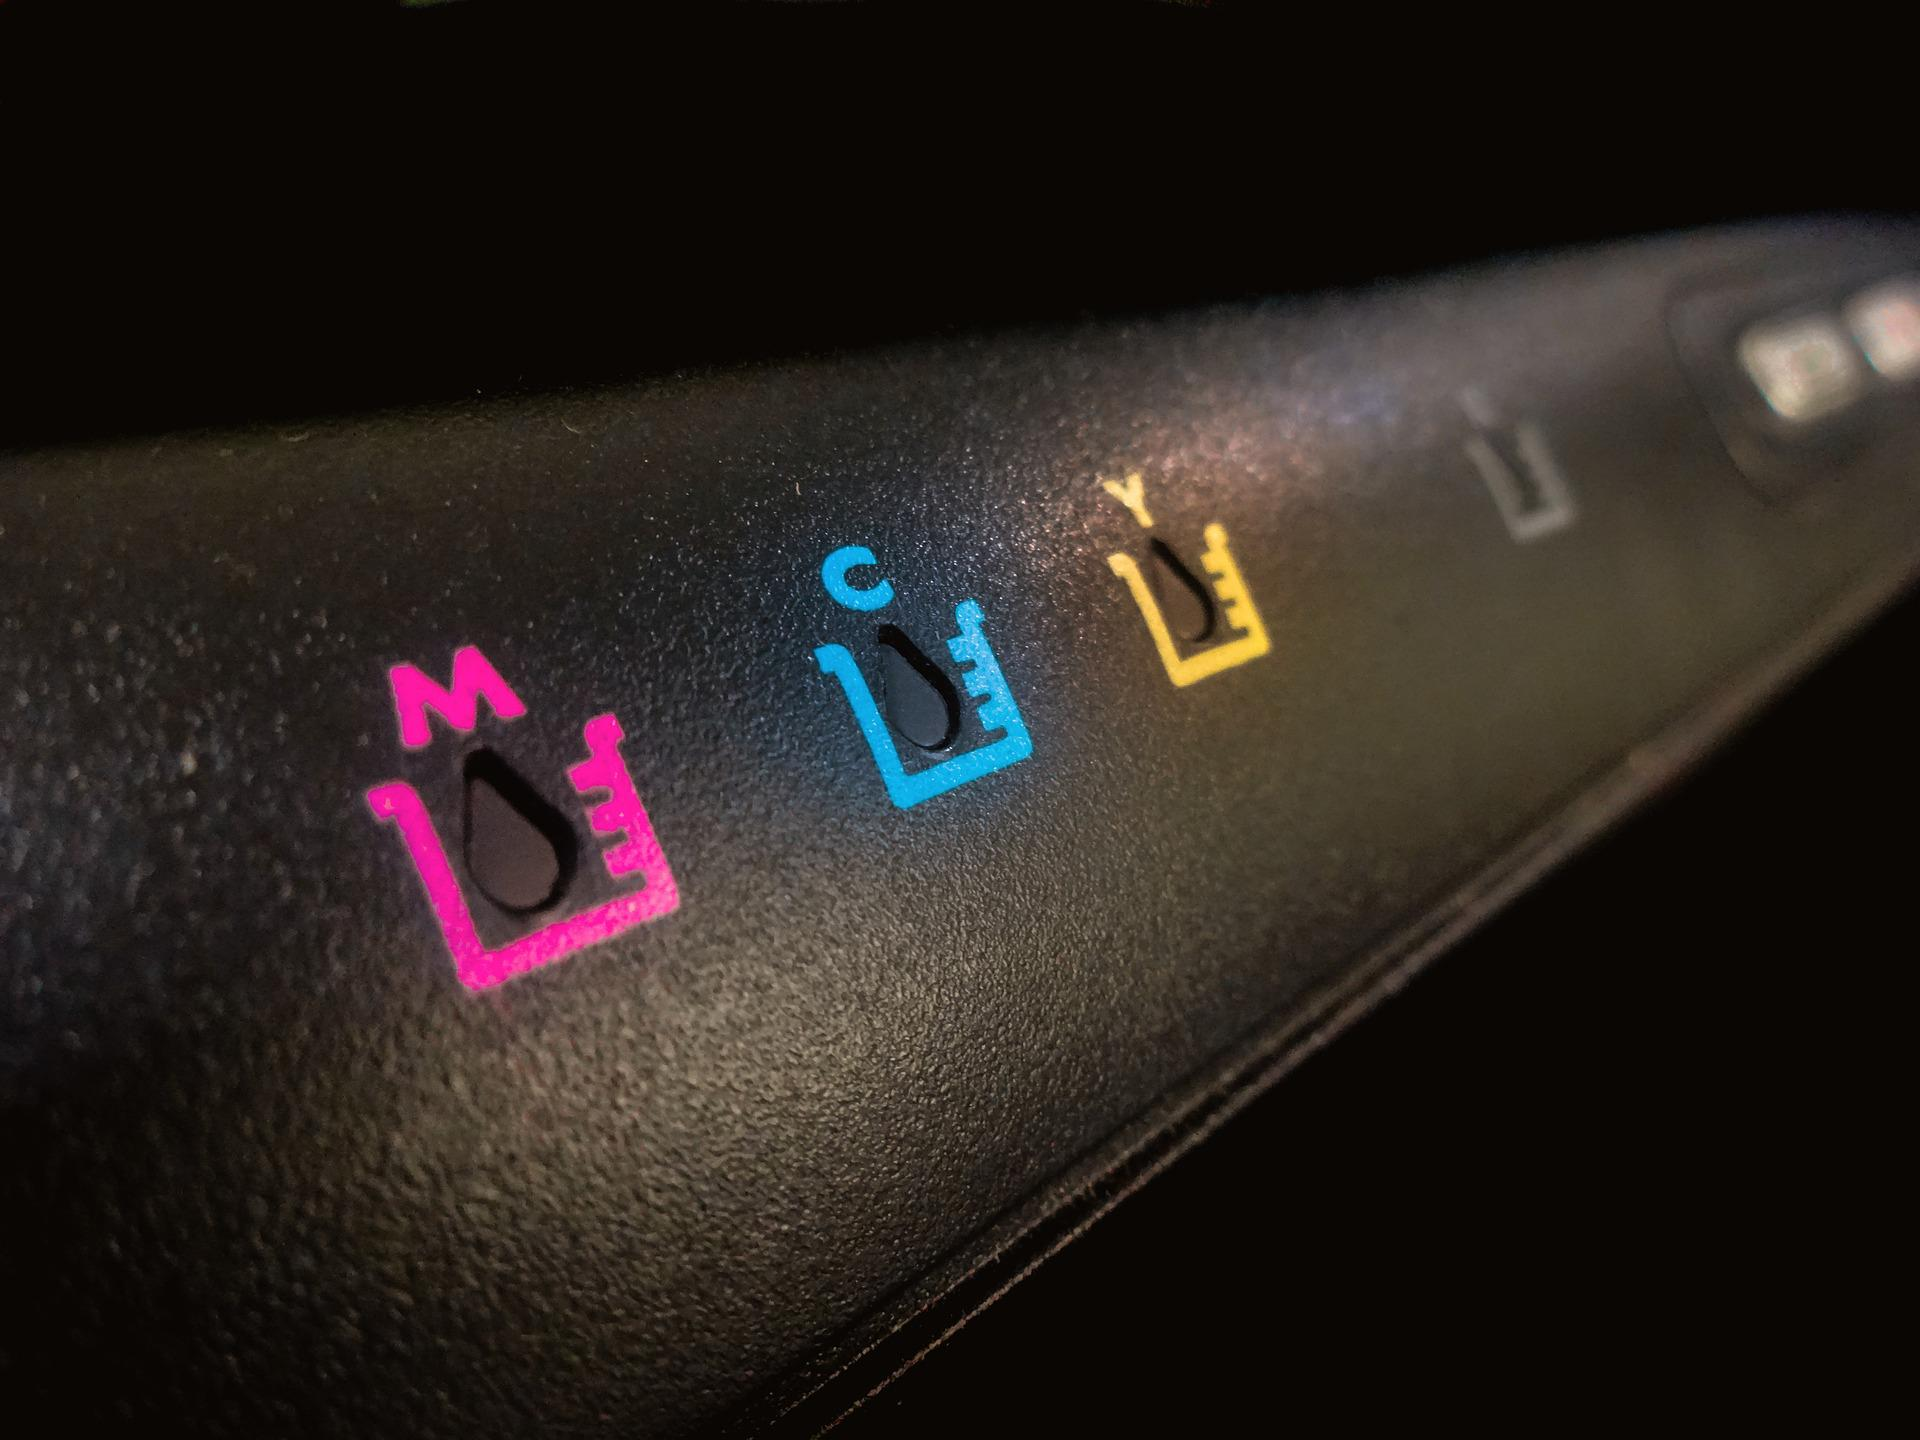 A close-up of a color printer